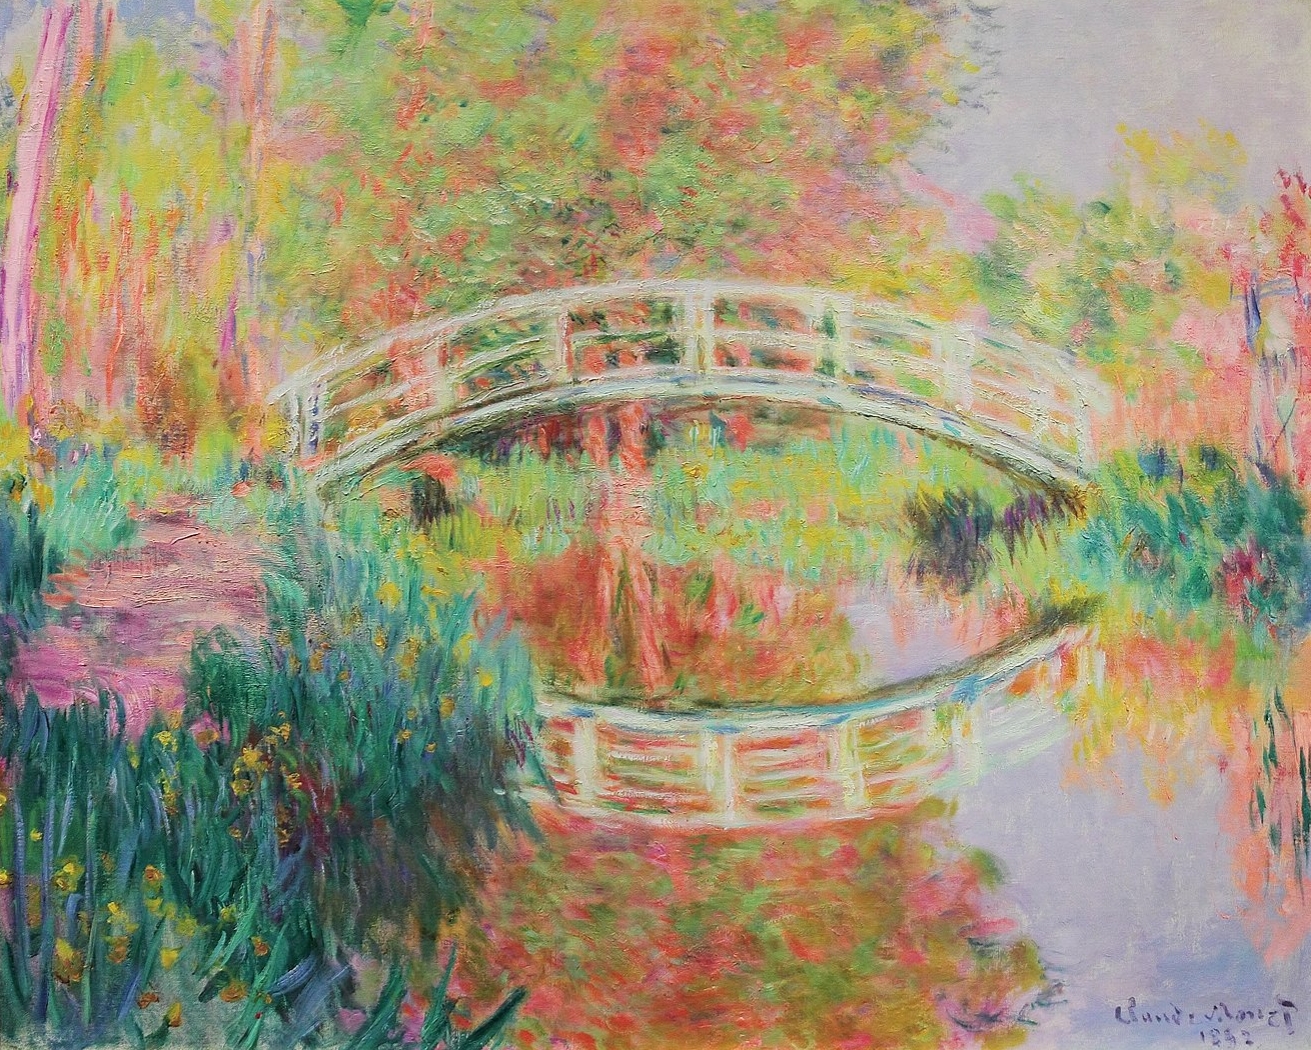 Claude+Monet-1840-1926 (470).jpg